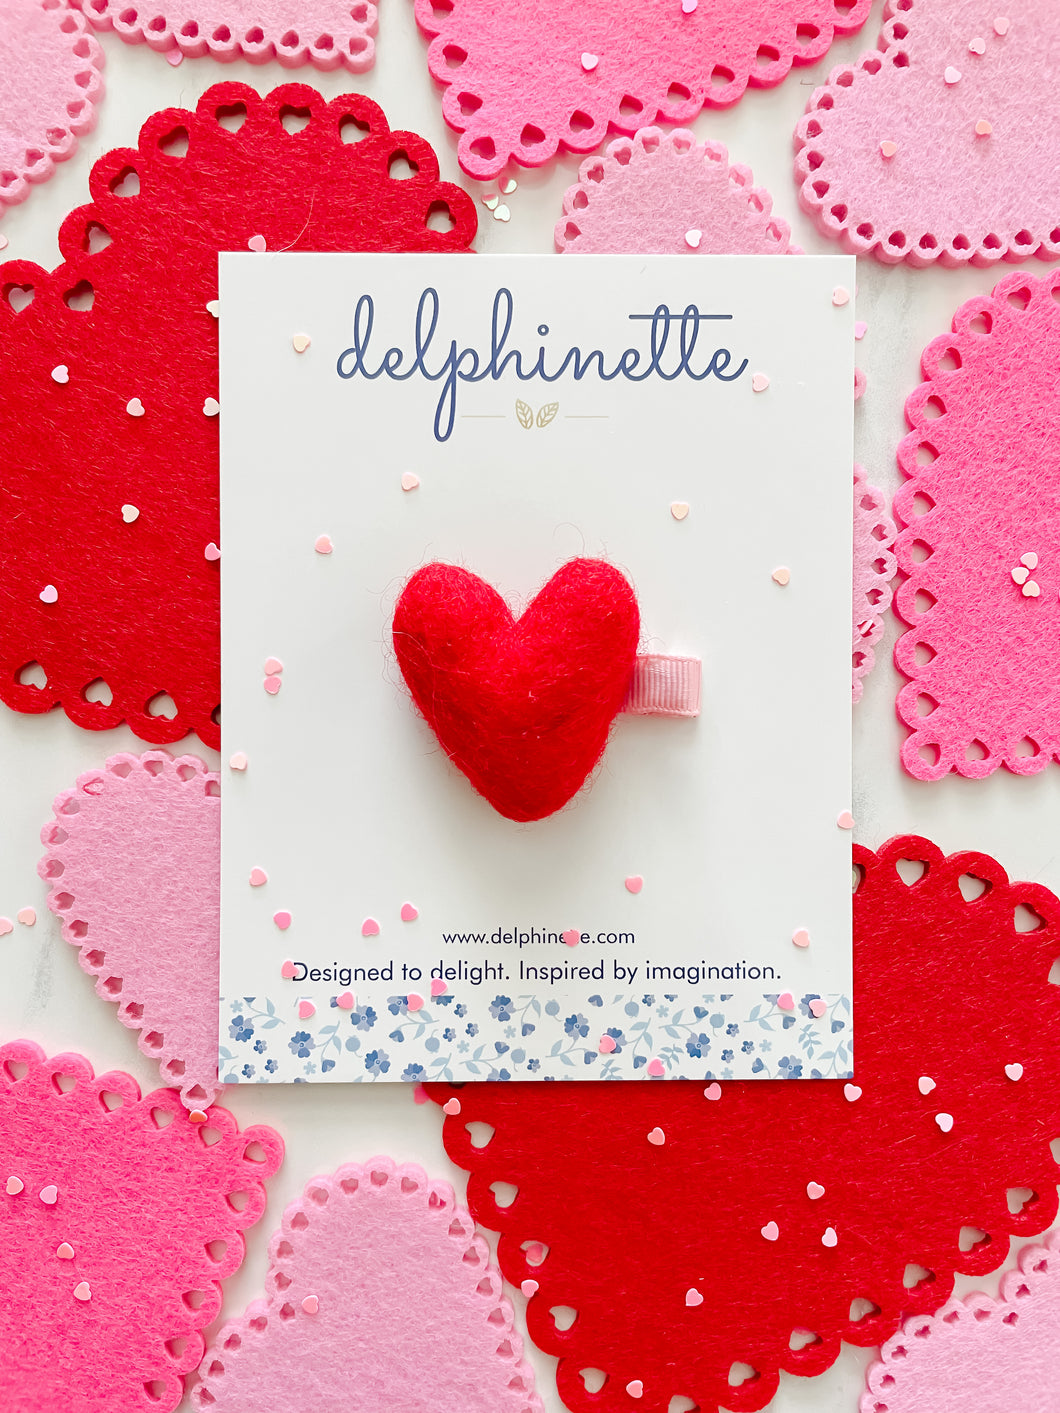 delphinette handmade felt little girl/baby girl hair accessory - a little red heart that can be customized as a hair clip, headband or hair tie. Handmade in Canada.